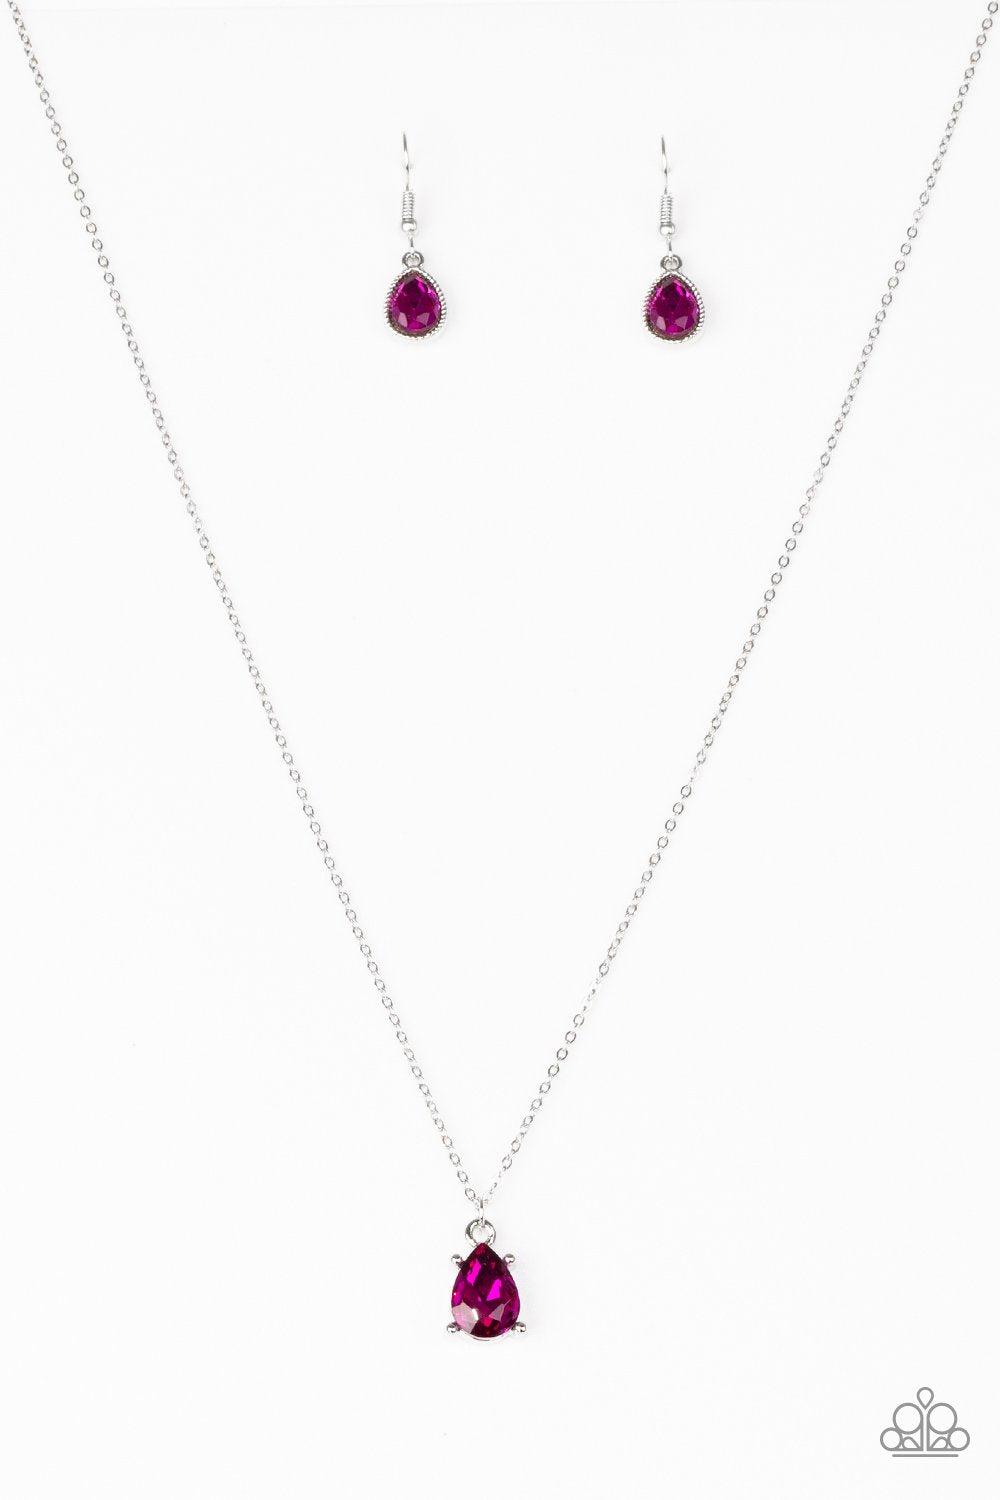 Classy Classicist Pink Rhinestone Necklace - Paparazzi Accessories-CarasShop.com - $5 Jewelry by Cara Jewels